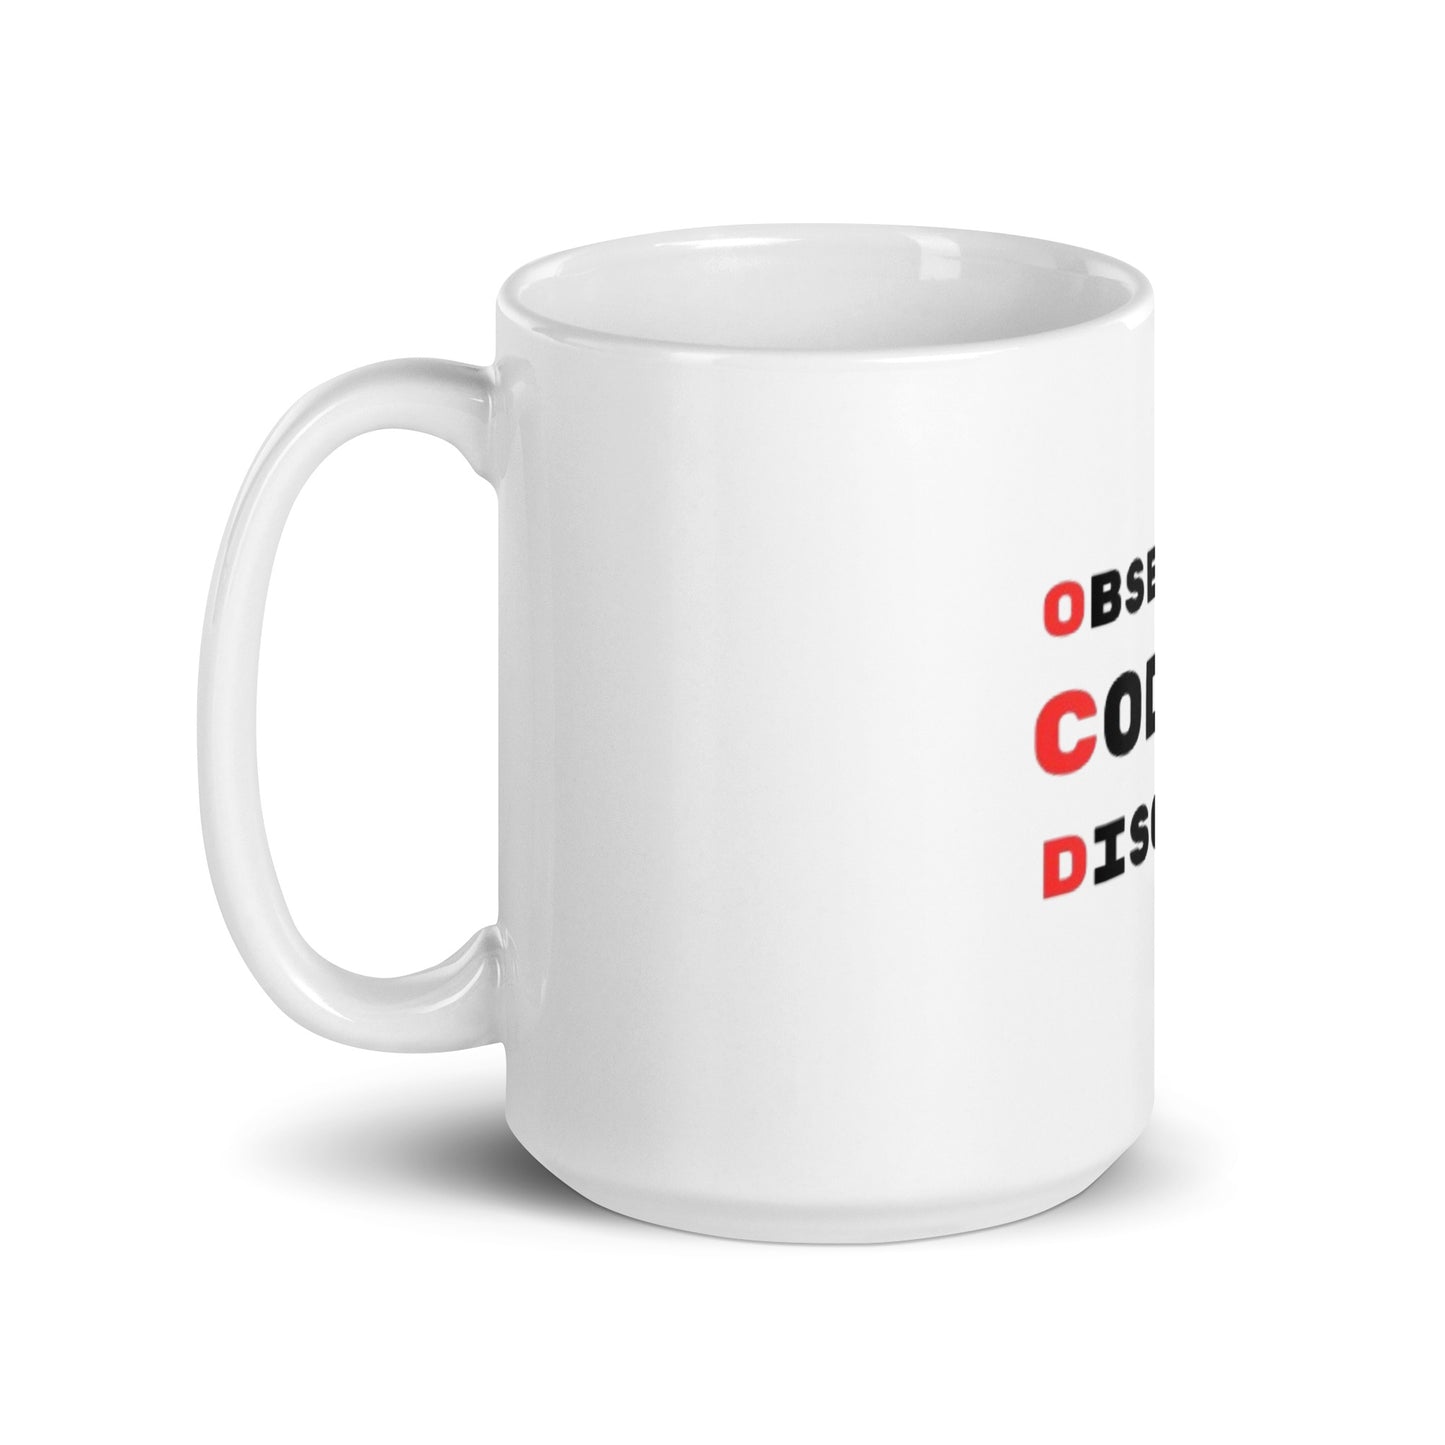 OCD glossy mug